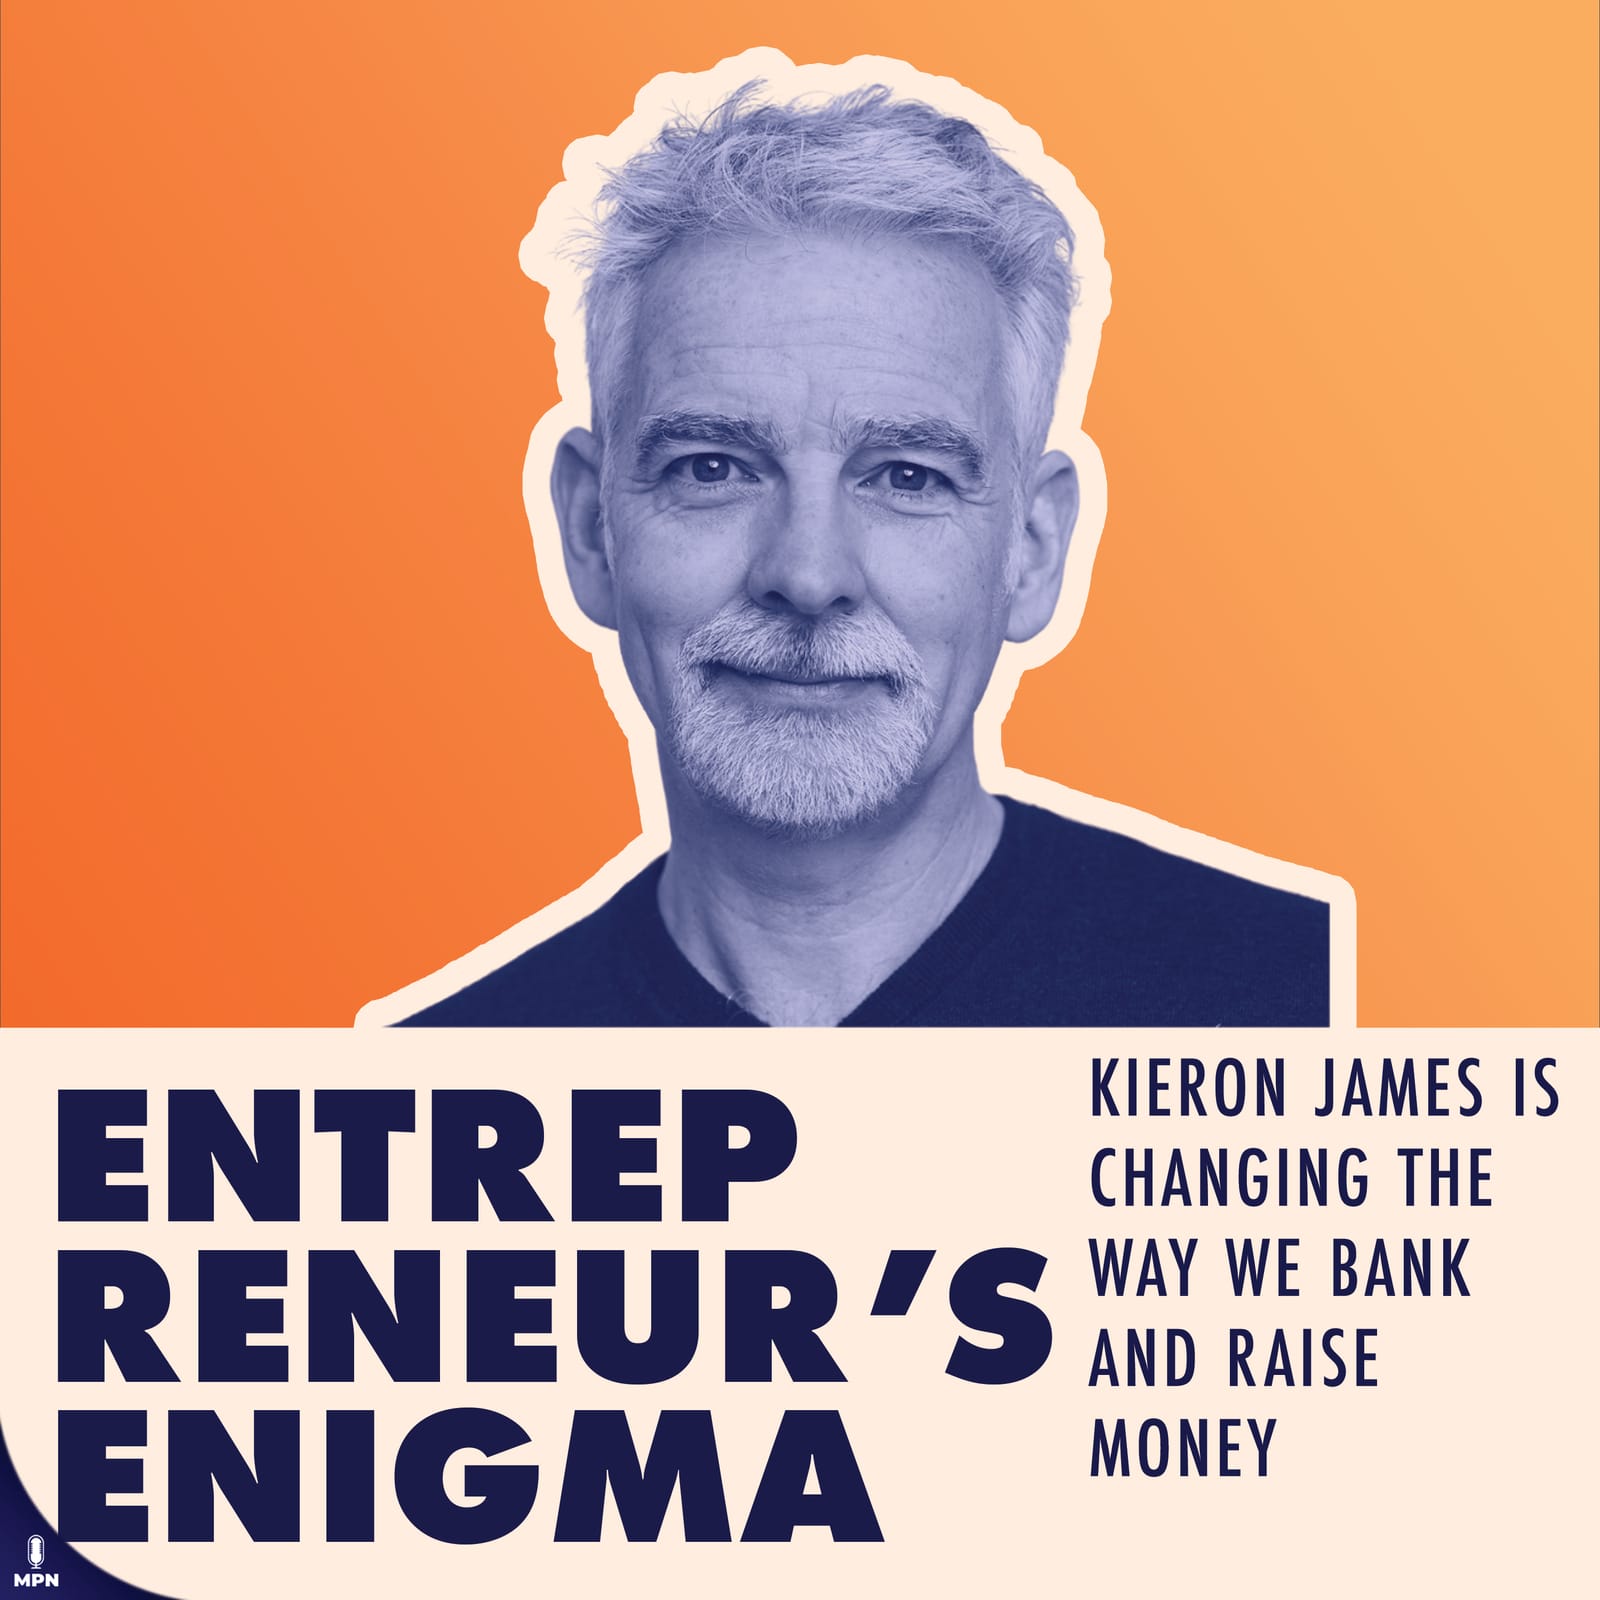 Kieron James Entrepreneur's Enigma Album art. Says: Kieron James is changing the way we bank and raise money.